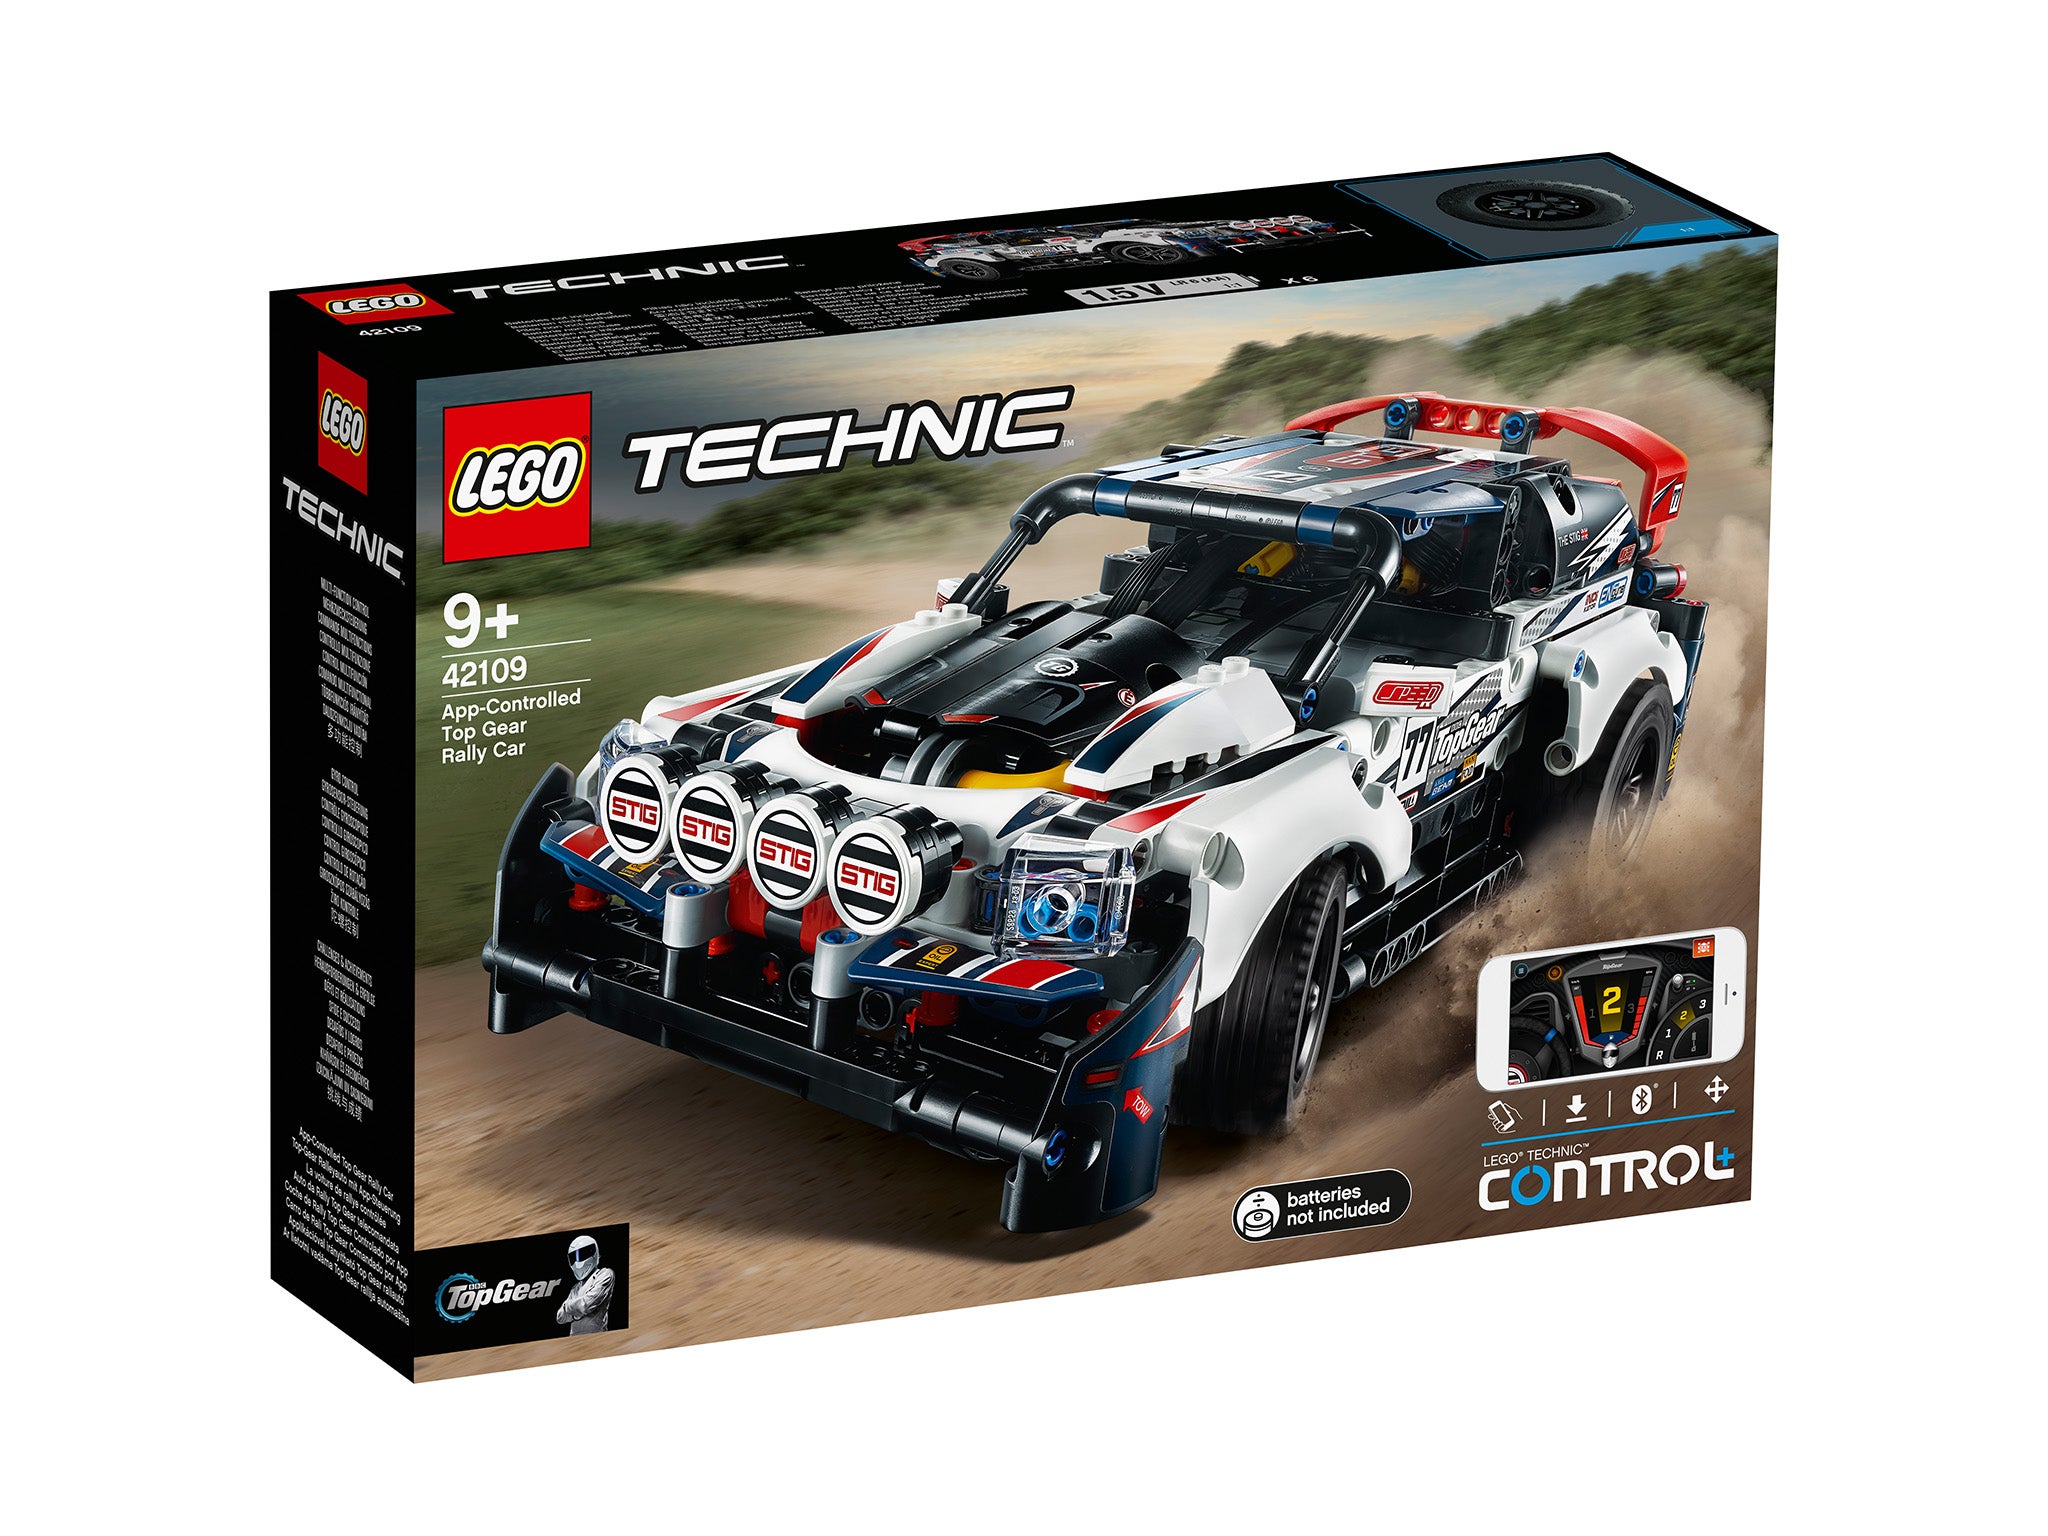 Lego 42109 technic control+ app-controlled Top Gear rally car